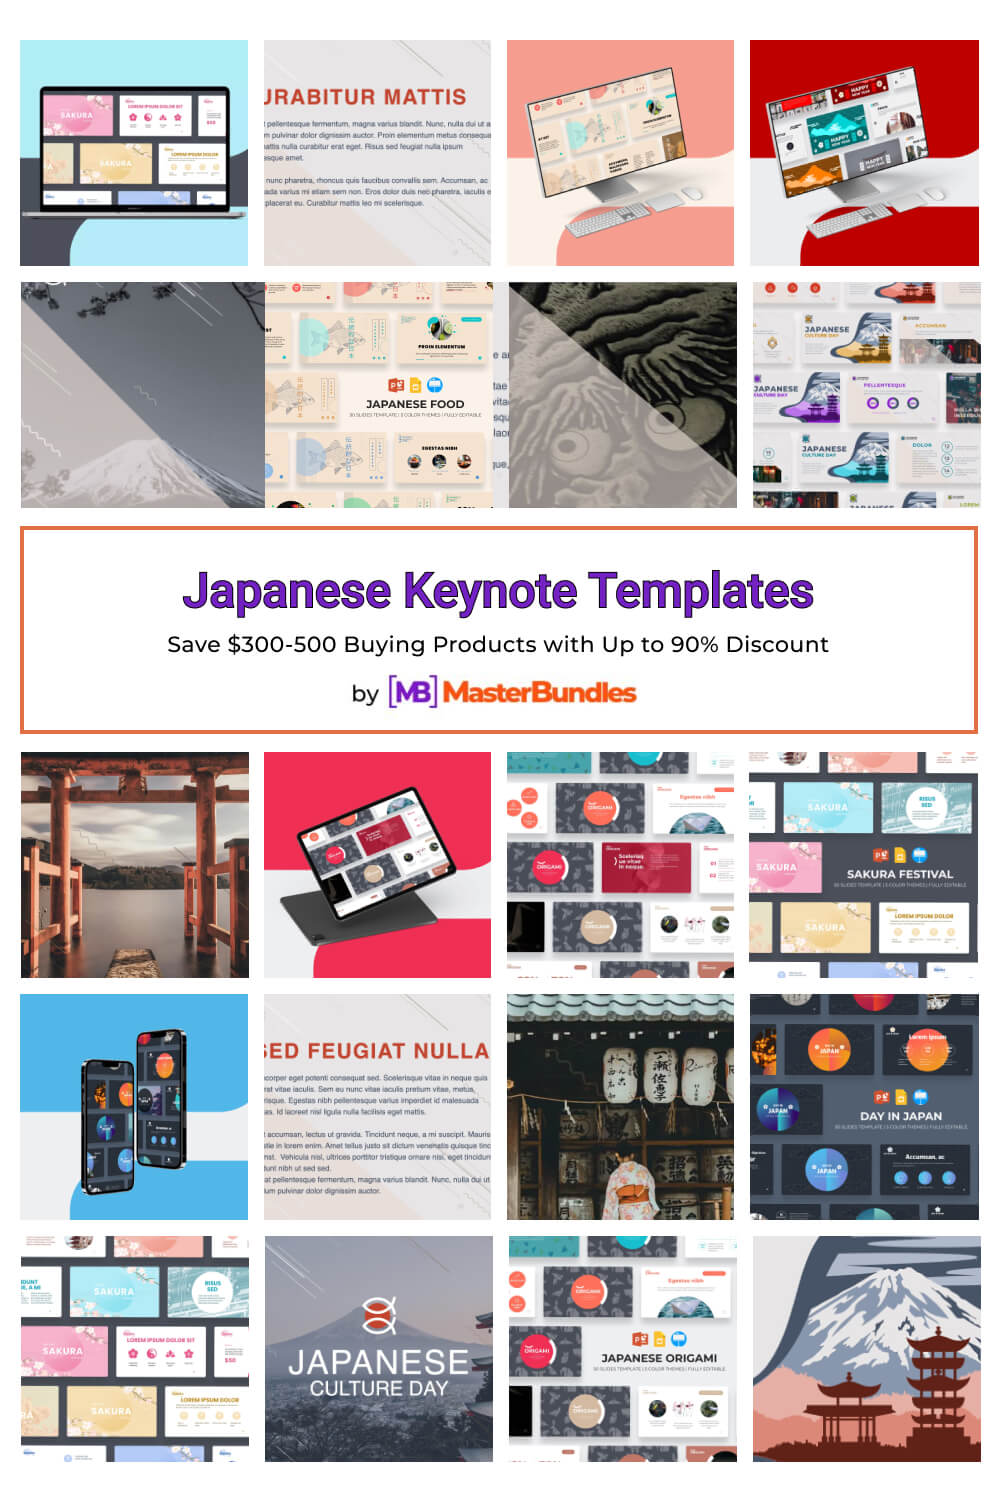 japanese keynote templates pinterest image.